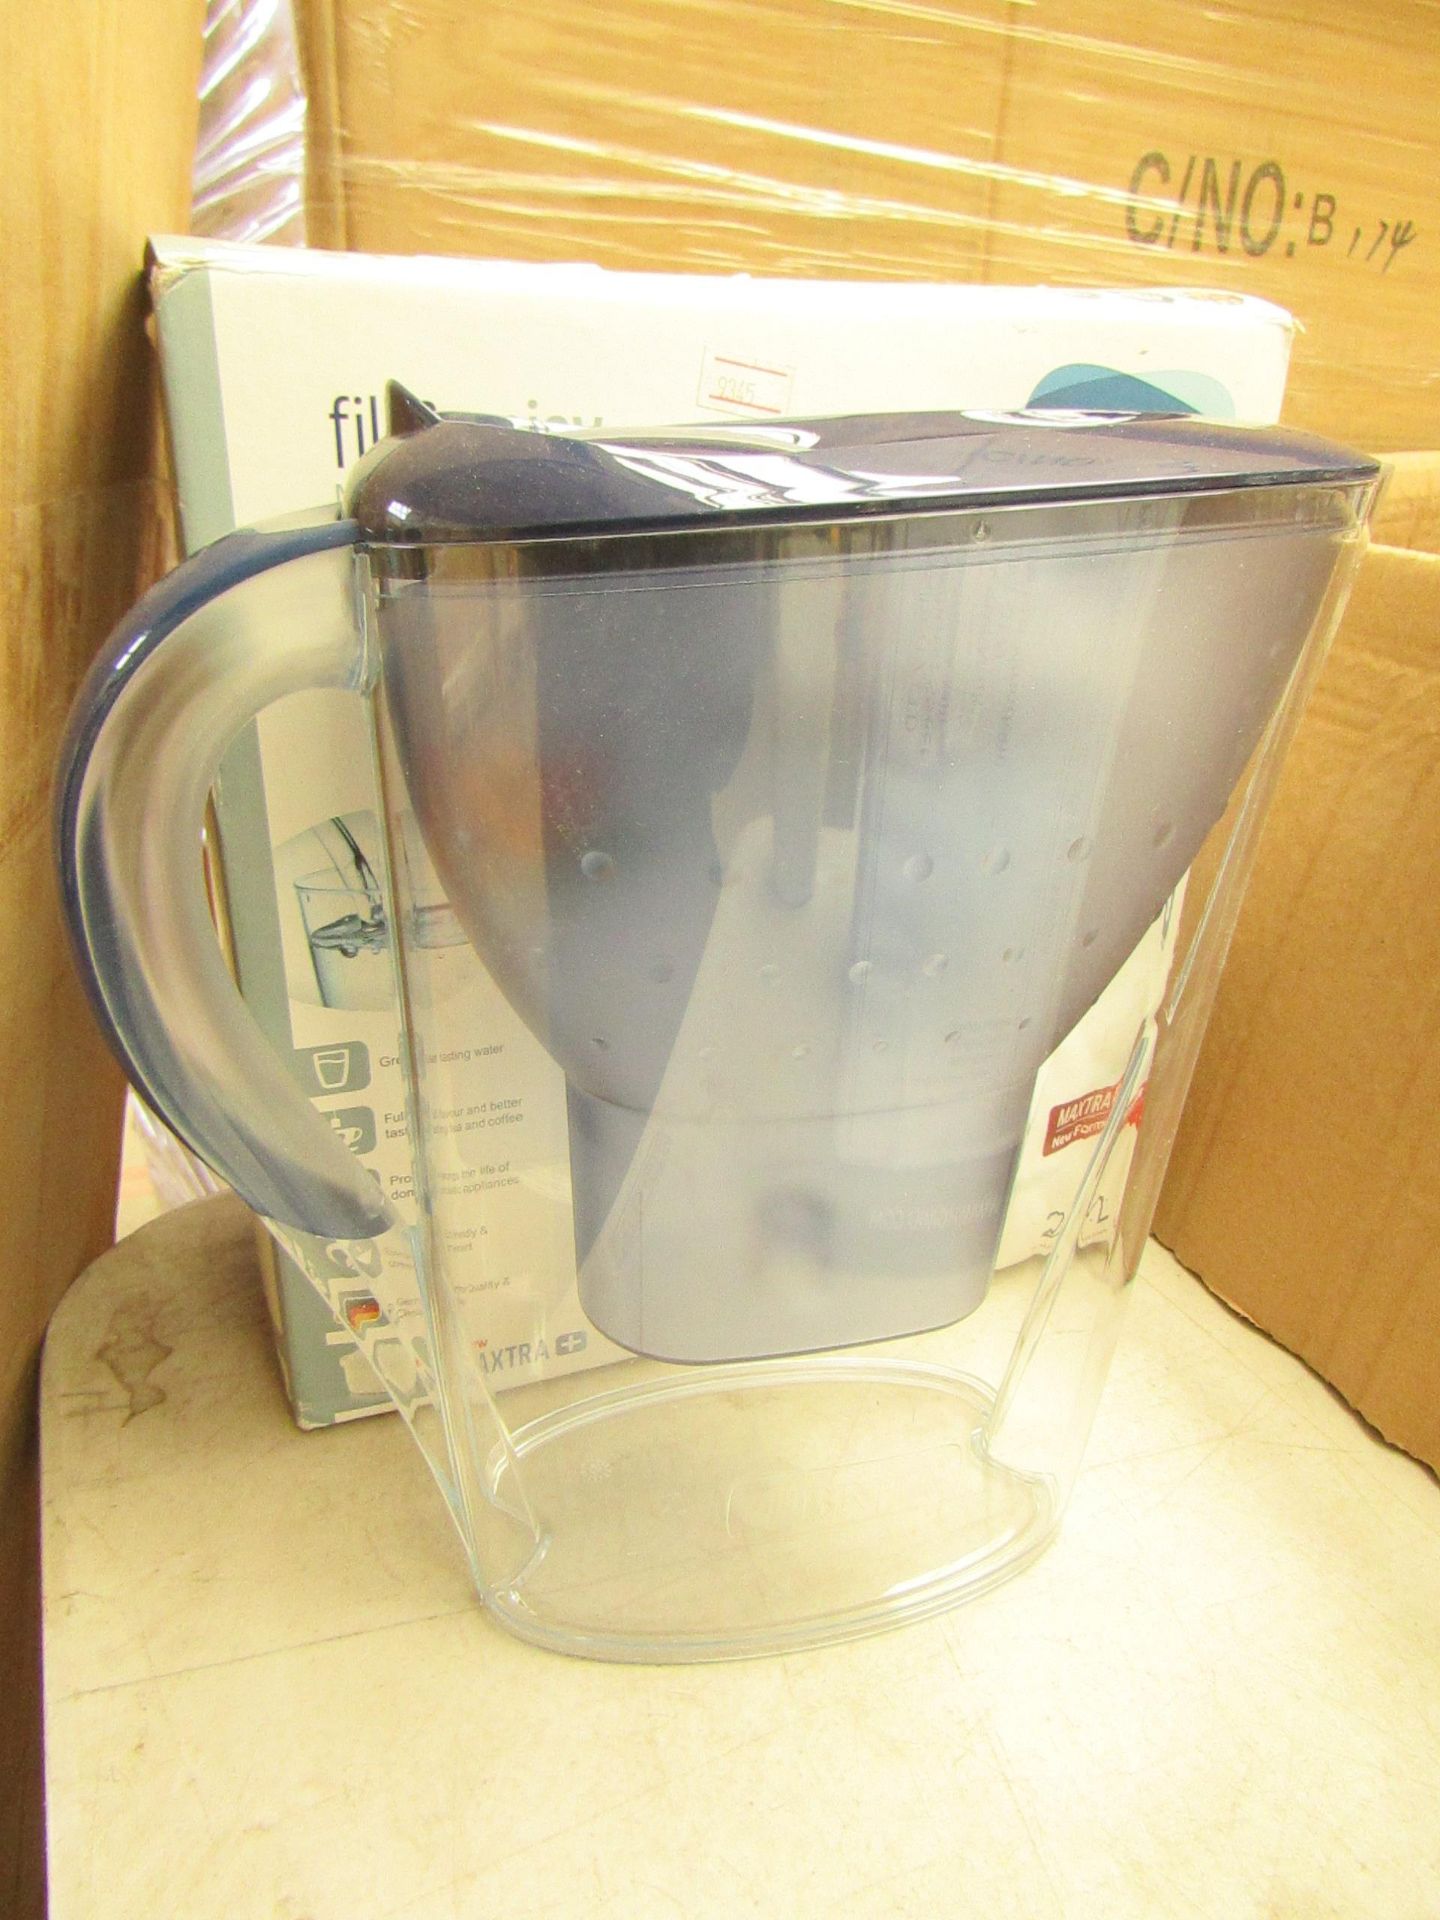 Brita Marella water filter jug, unchecked and boxed